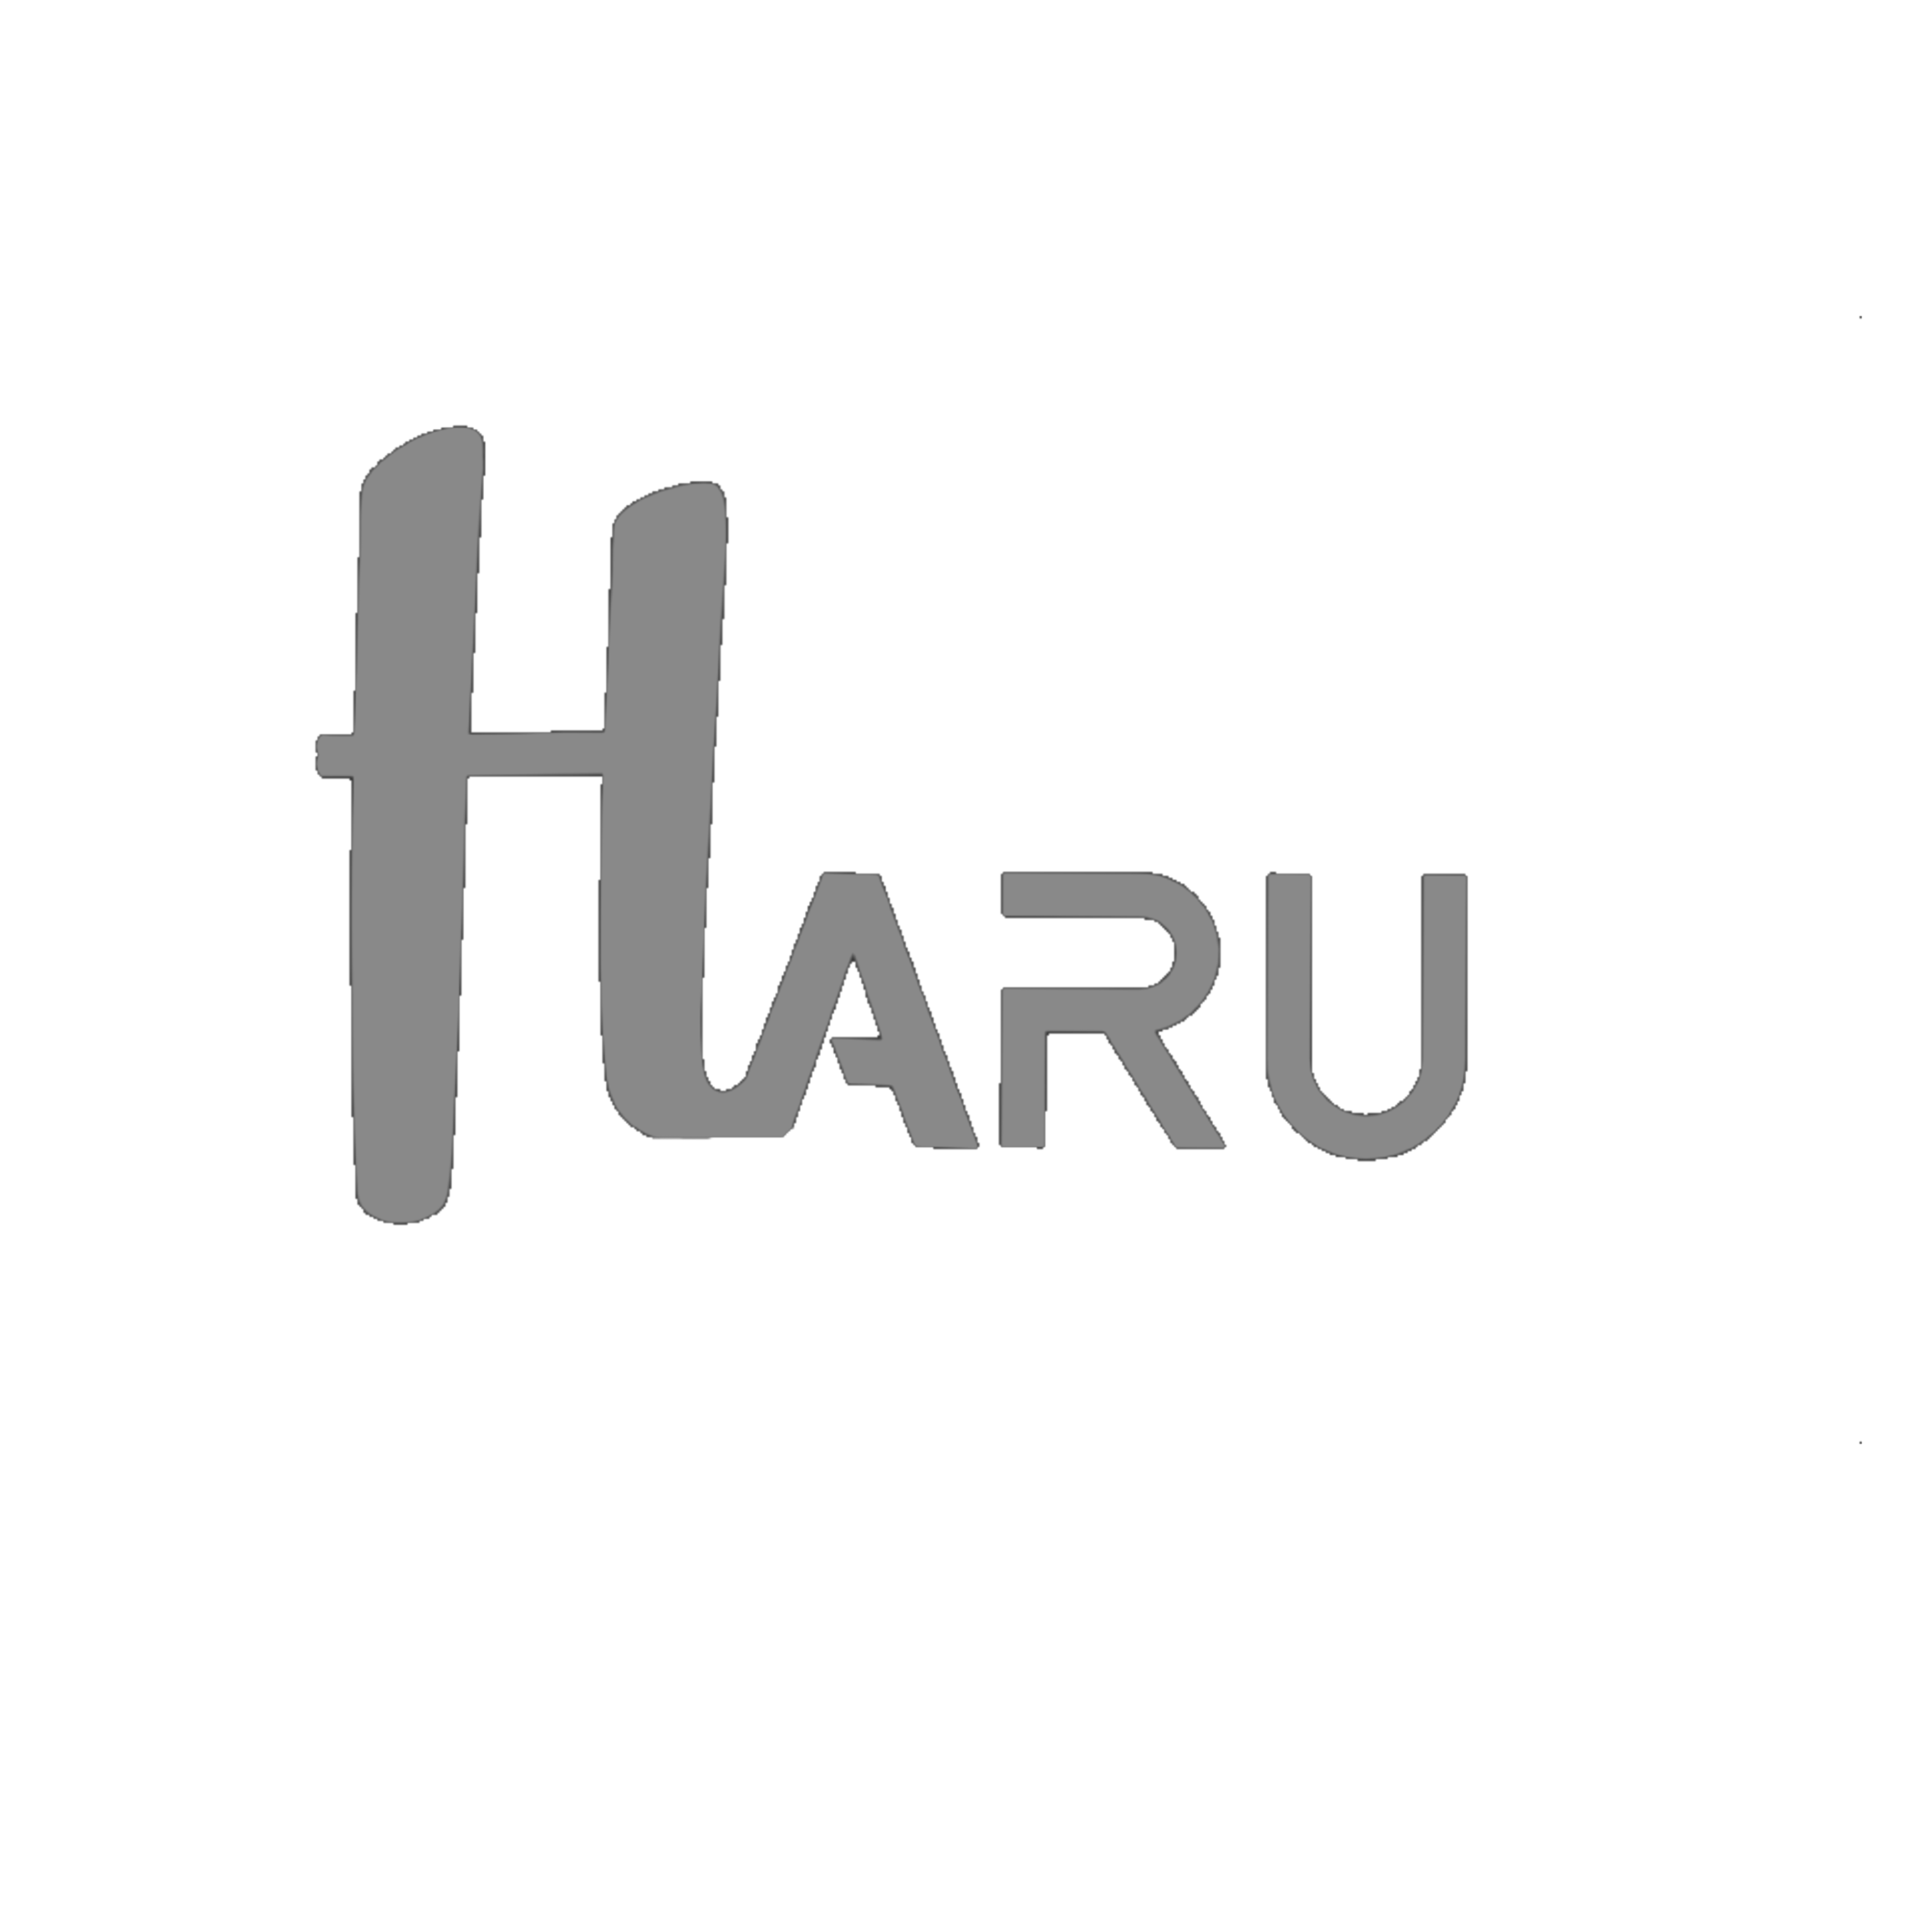 freetoedit haru #haru sticker by @panida7501